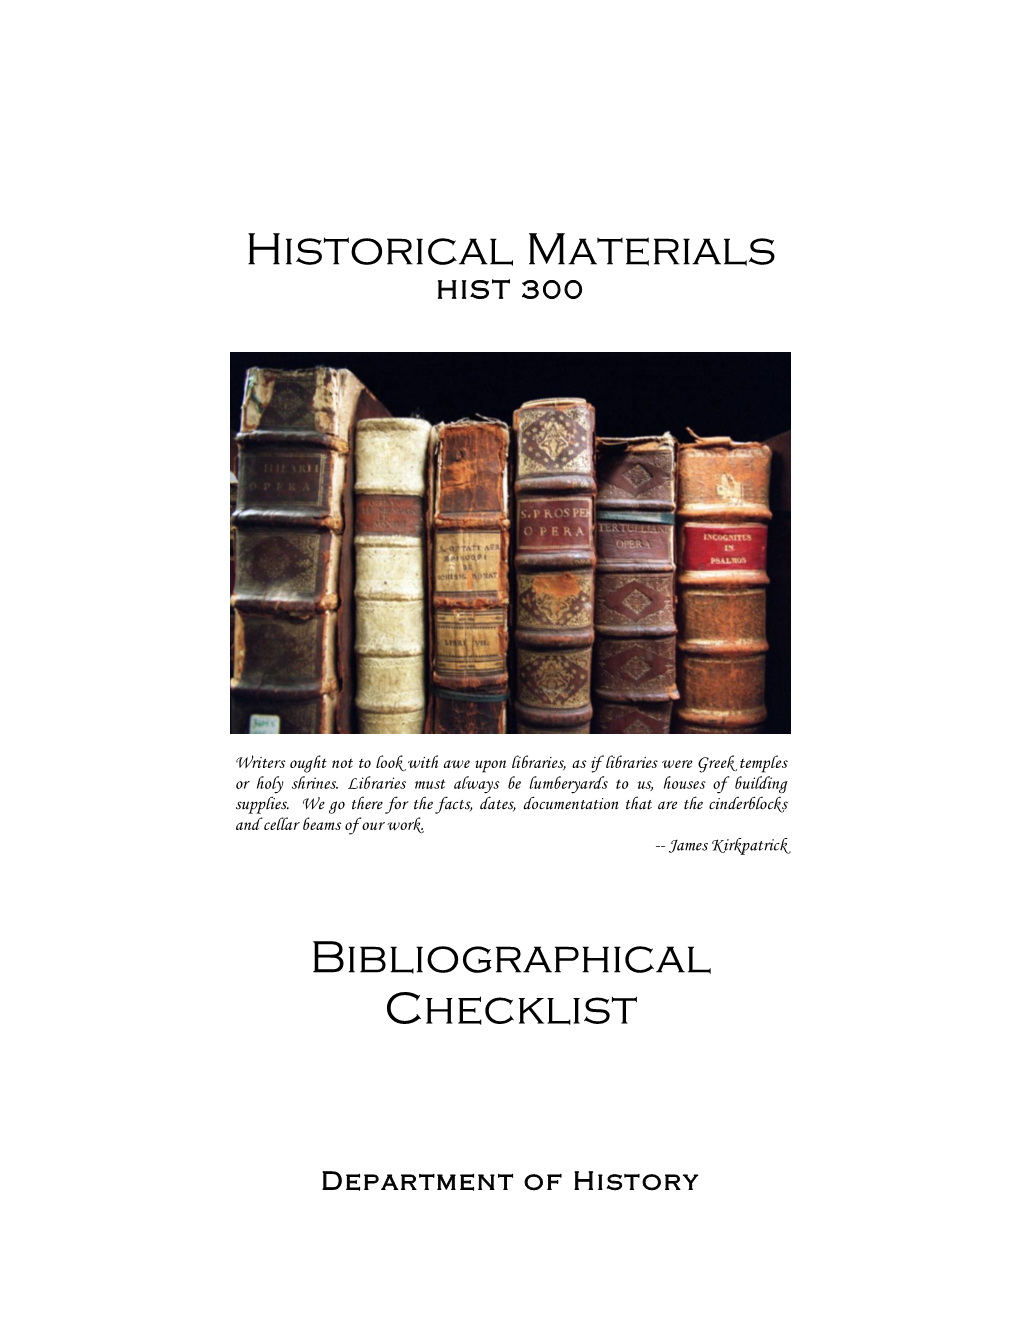 Bibliographical Checklist